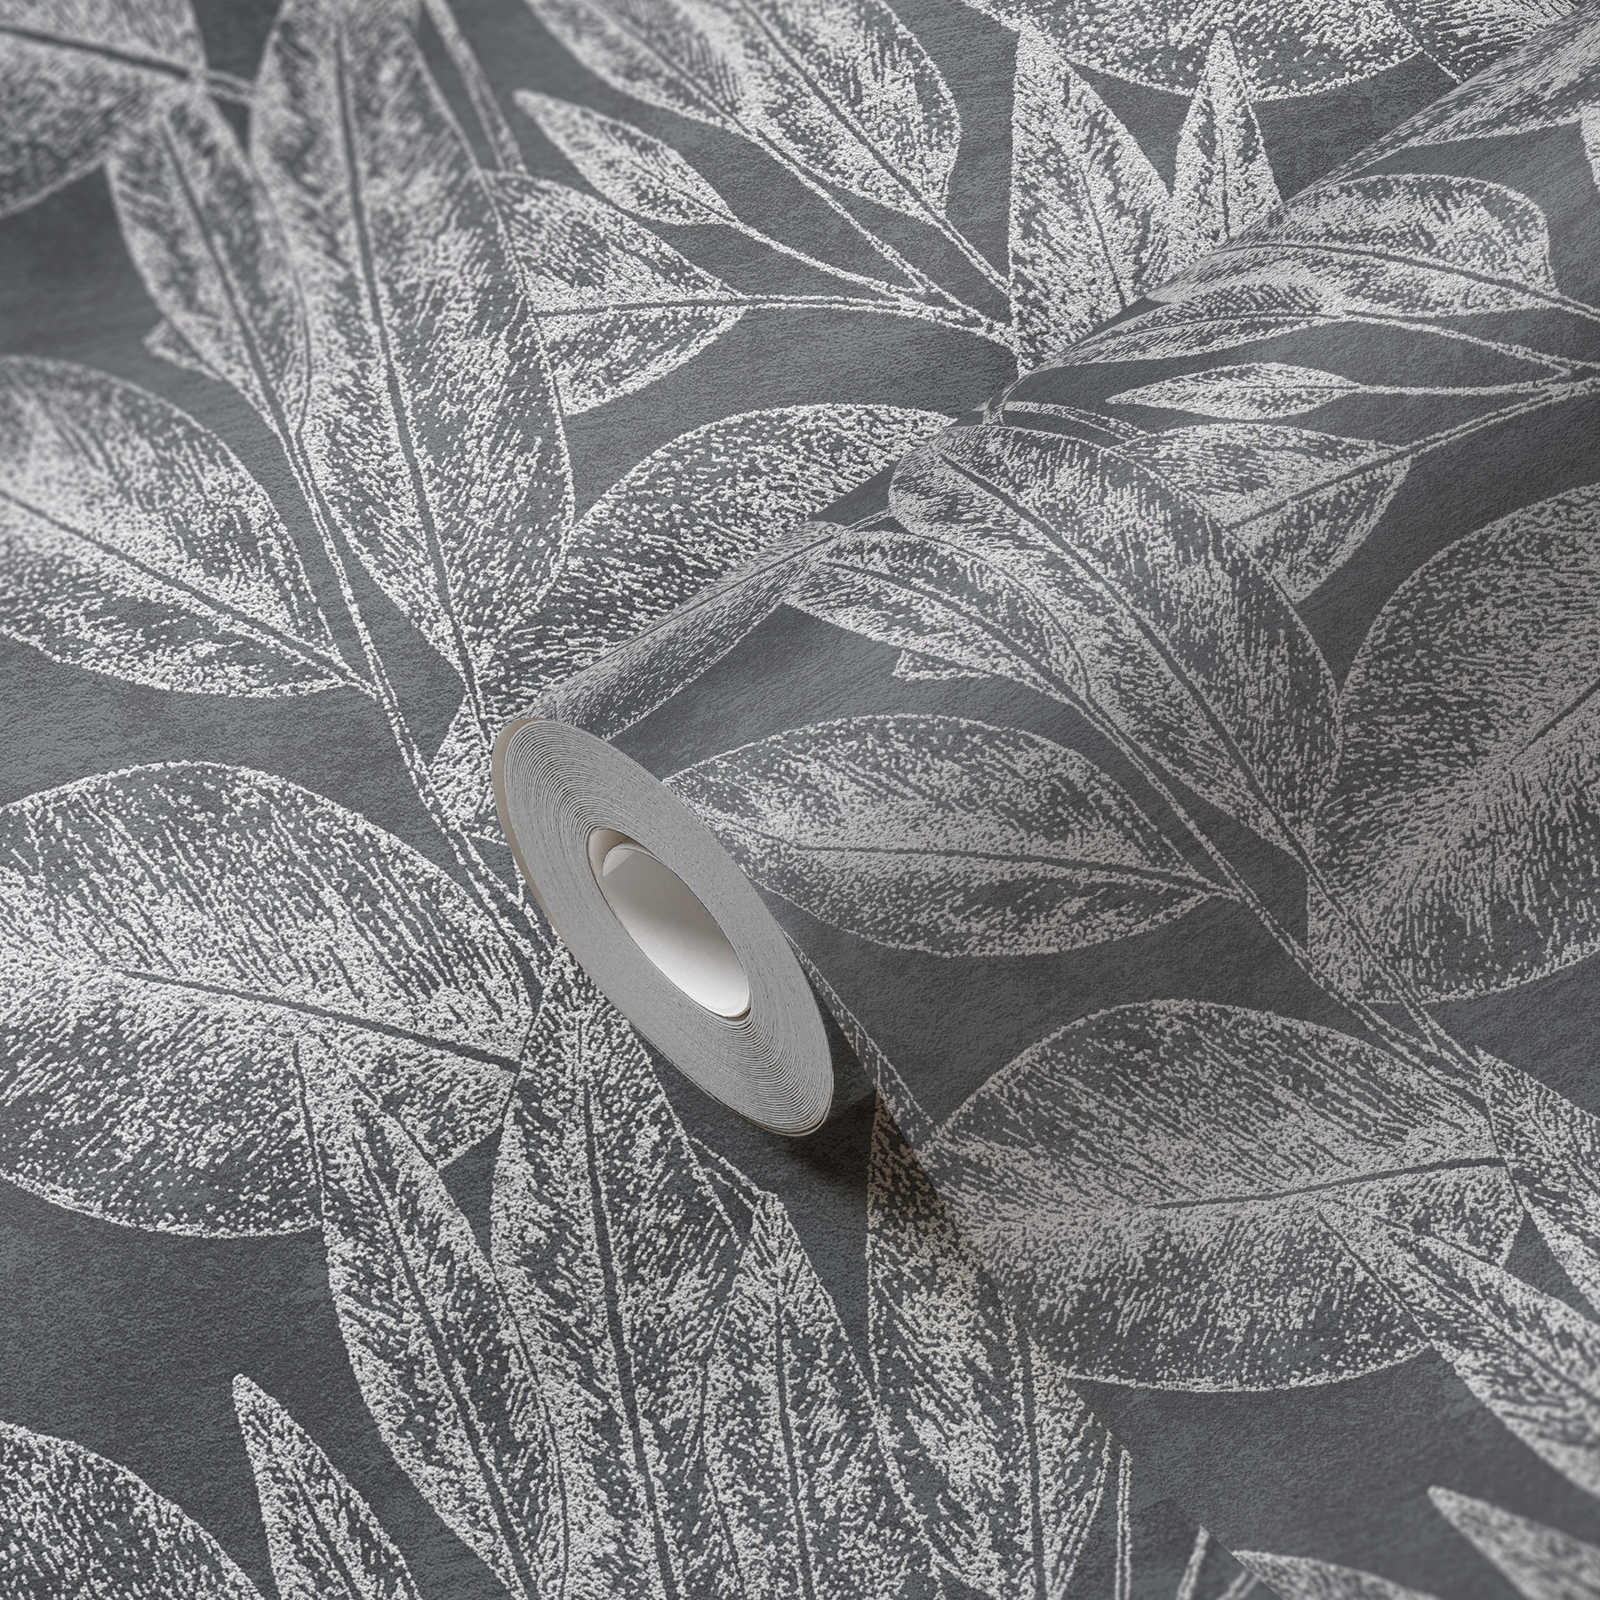             Leaves wallpaper lines art - Black, Metallic
        